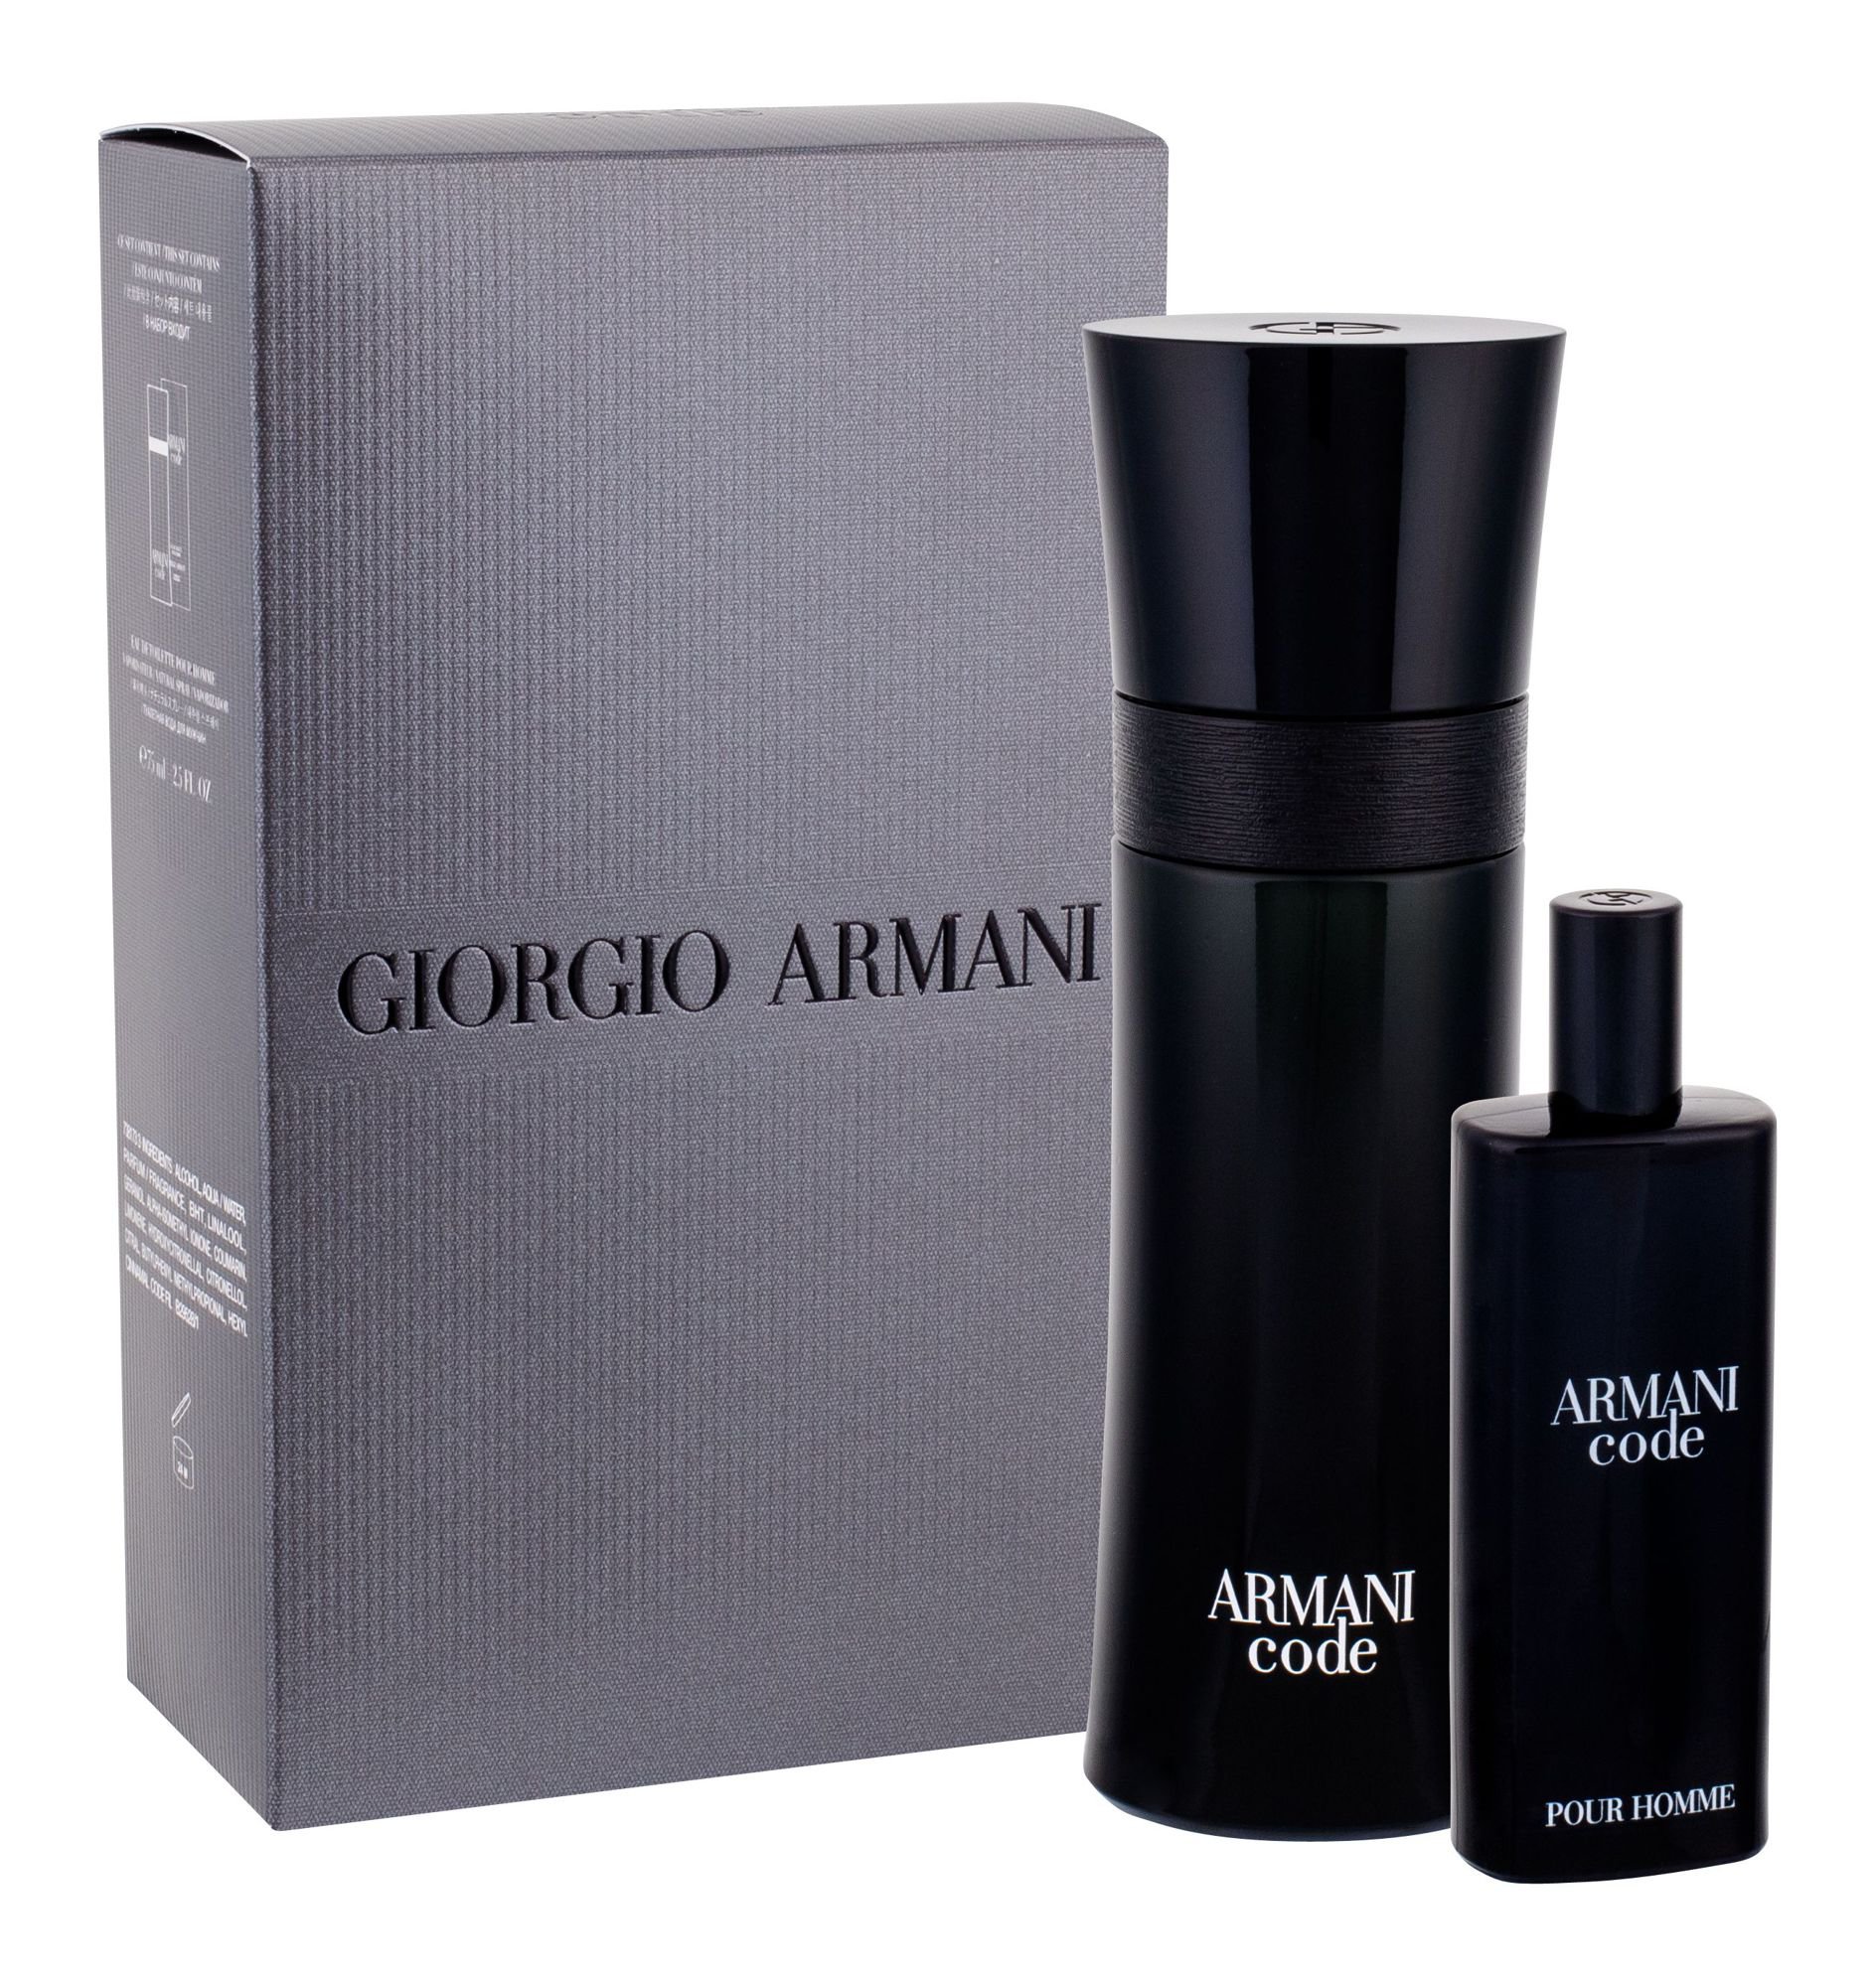 Giorgio Armani Armani Code Pour Homme SET: Toaletní voda 75ml + Toaletní voda 15ml